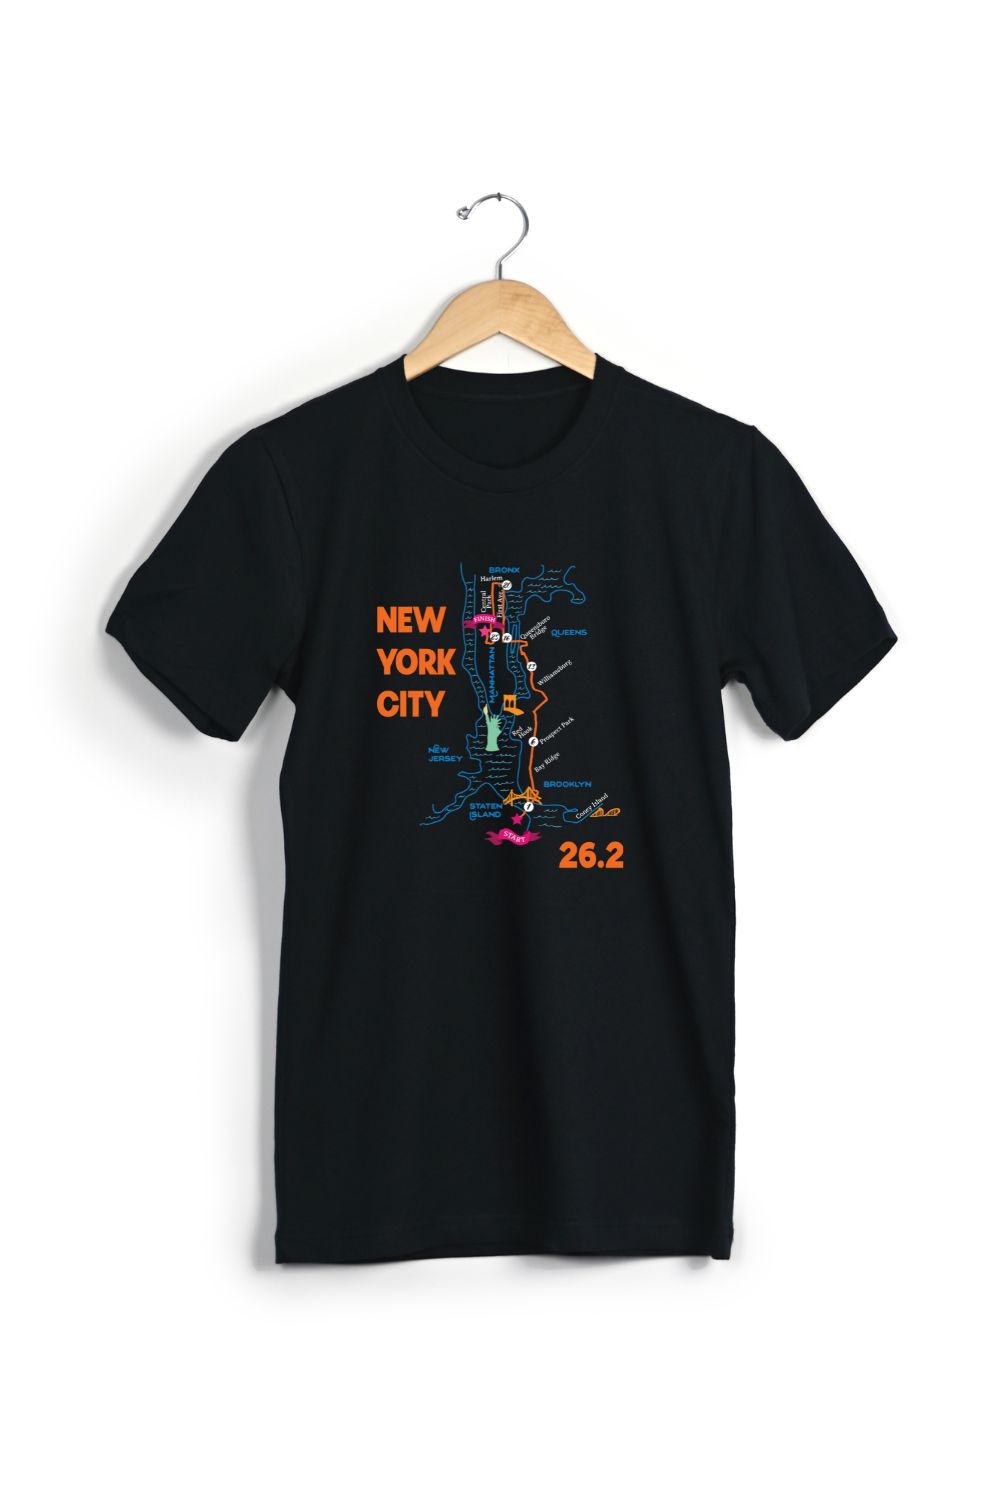 NYC Map - Marathon T-Shirt